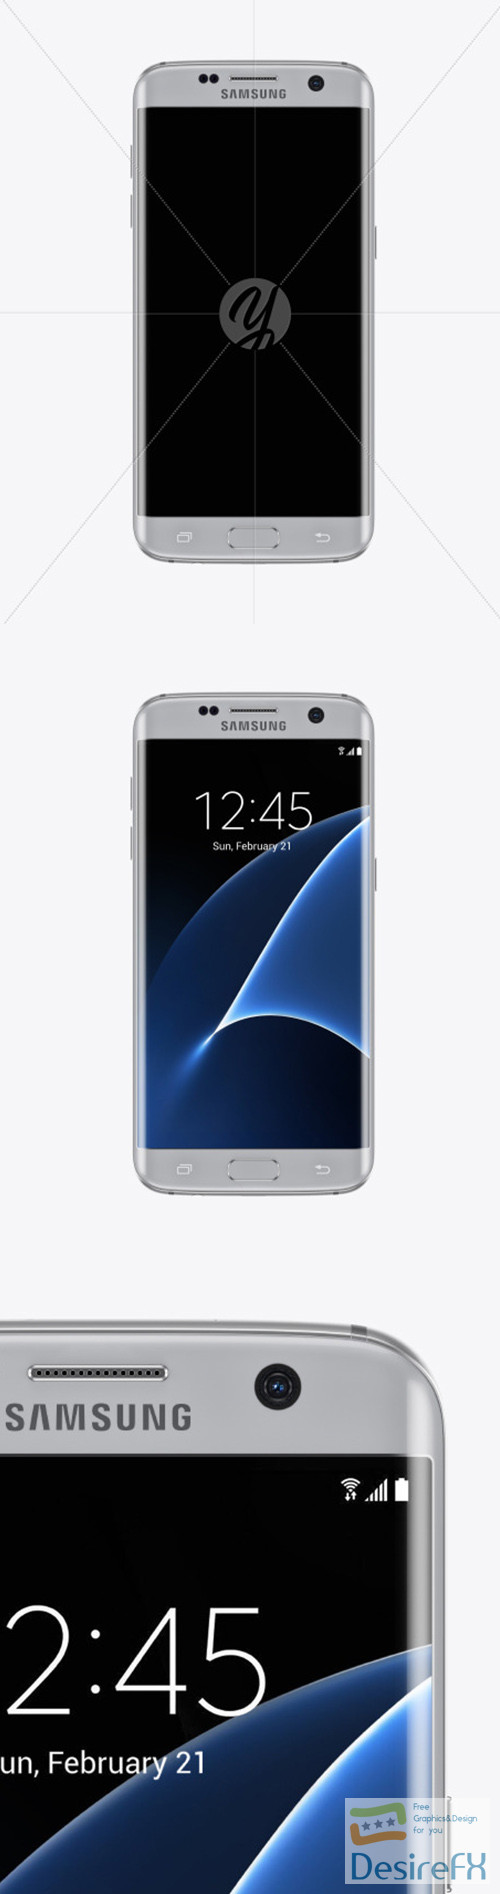 Silver Titanium Samsung Galaxy S7 Phone Mockup 52115 TIF